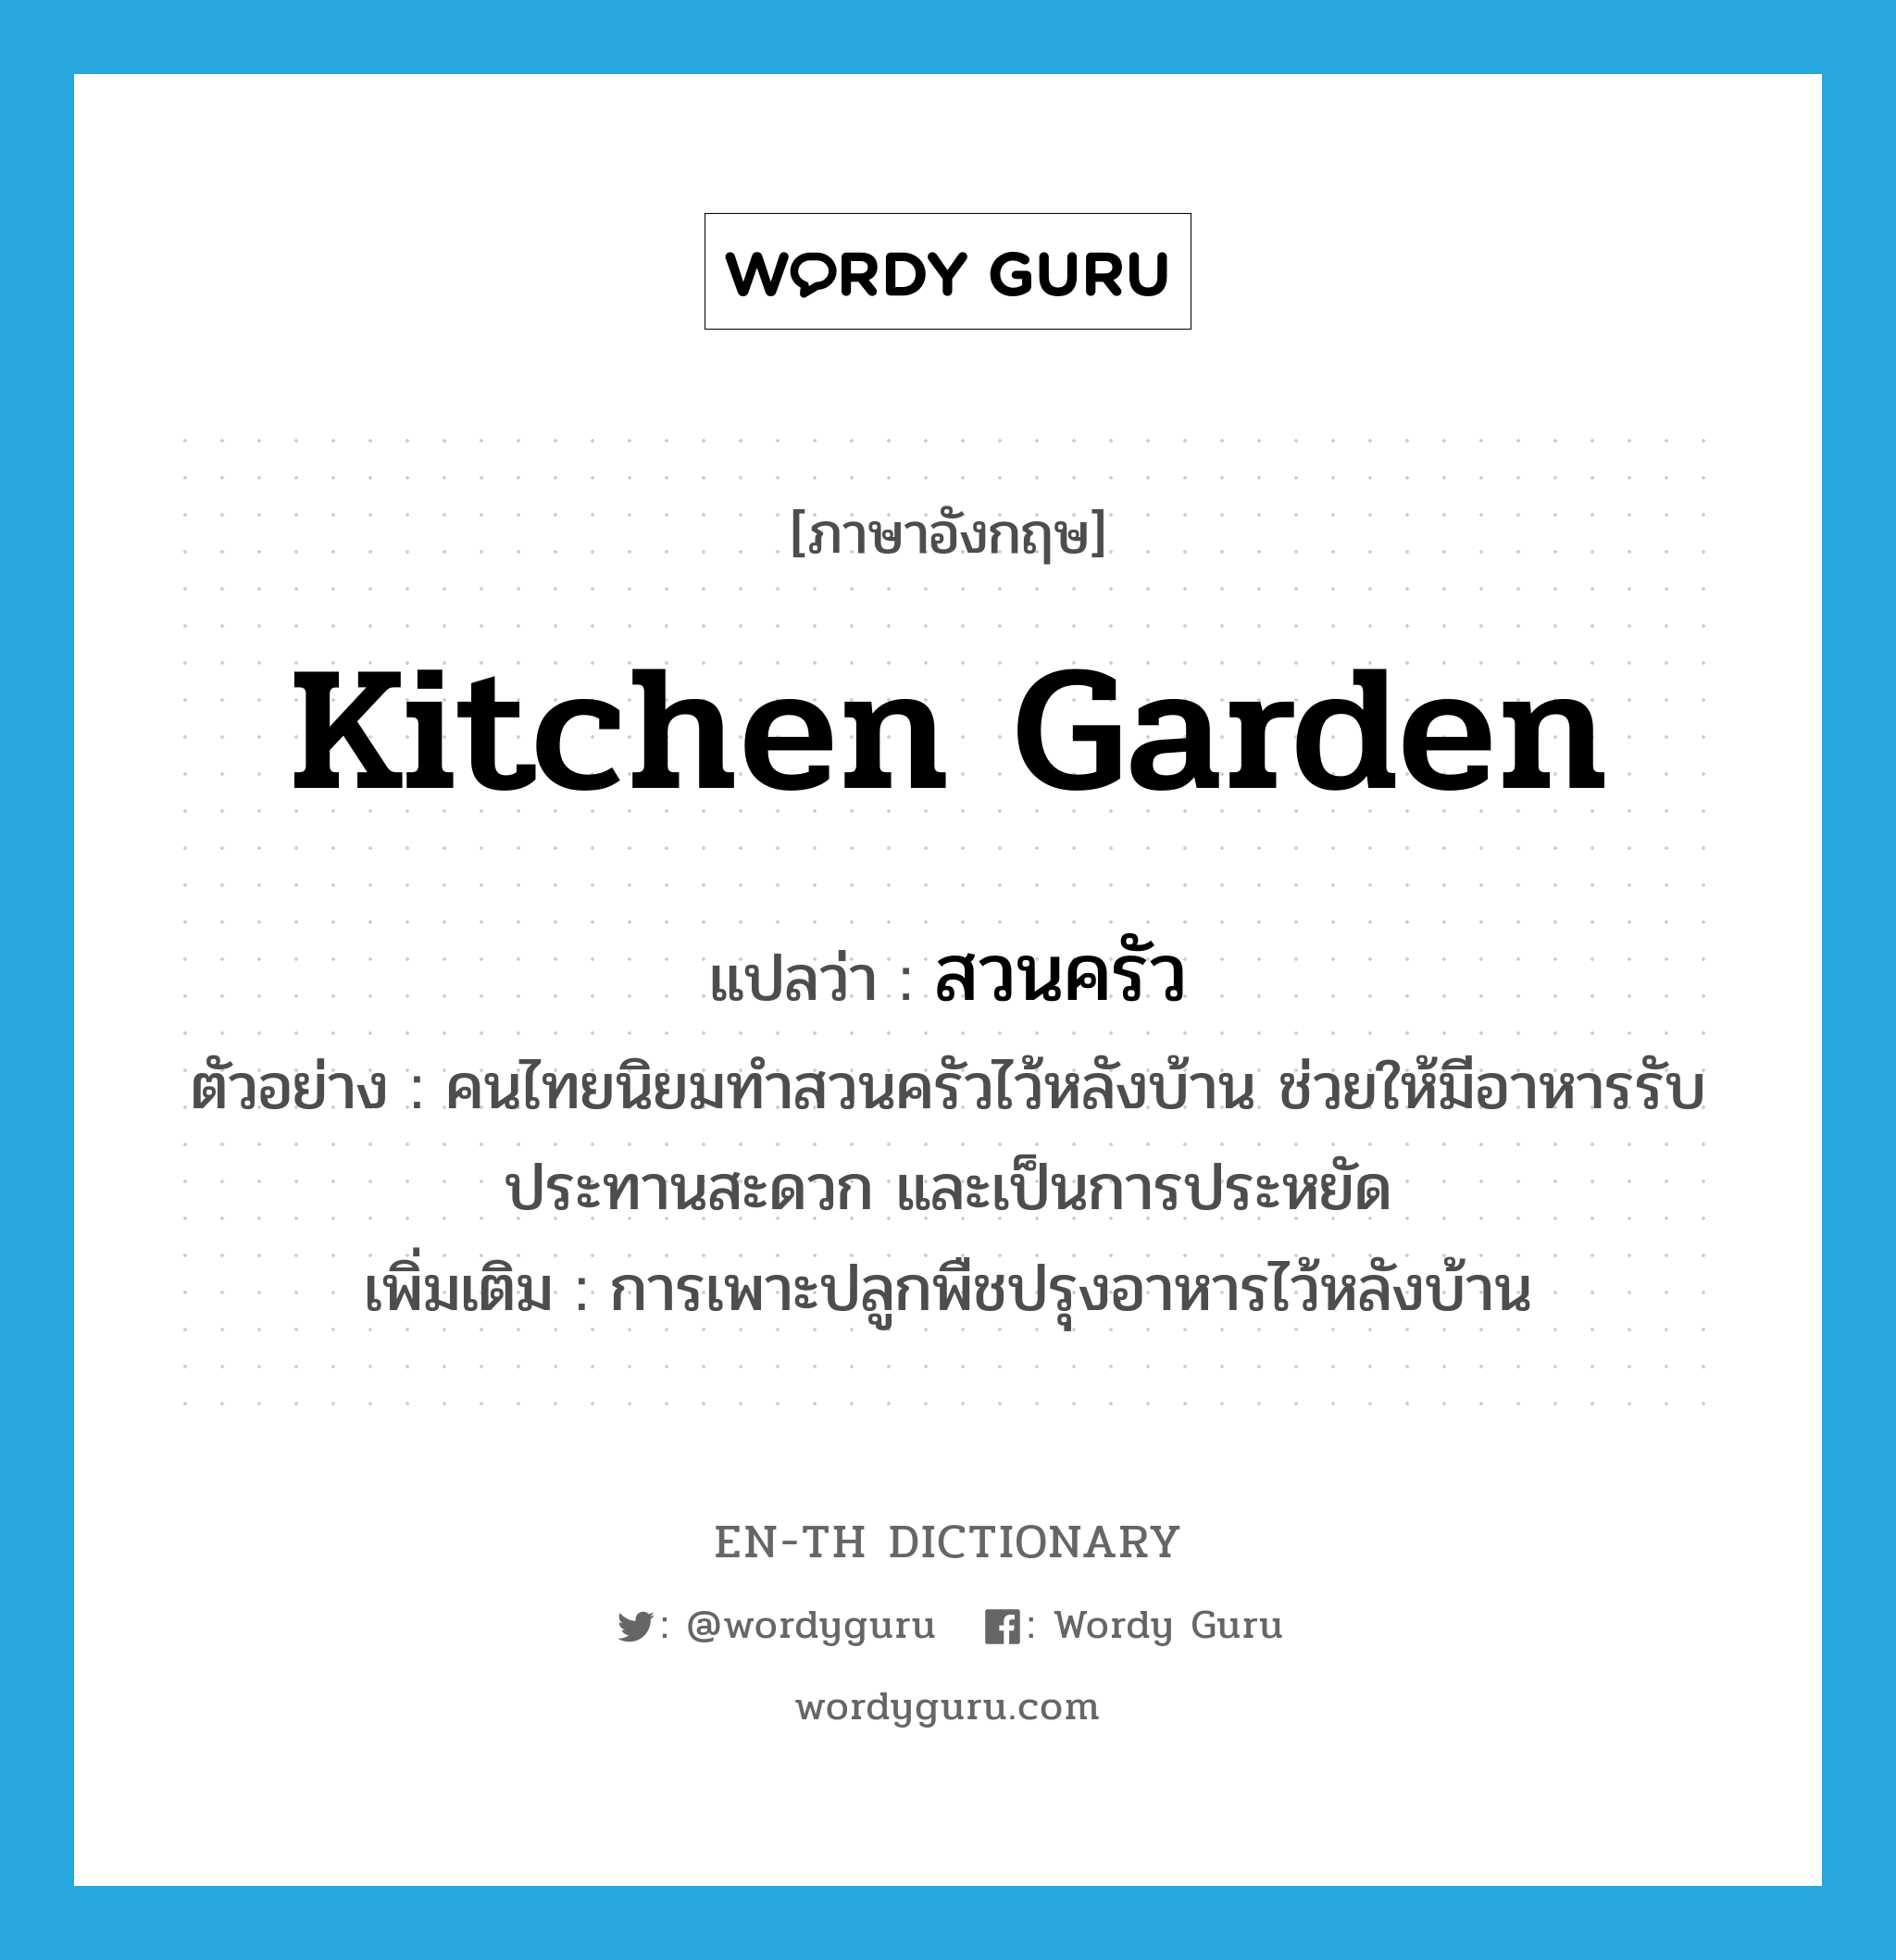 kitchen garden แปลว่า?, คำศัพท์ภาษาอังกฤษ kitchen garden แปลว่า สวนครัว ประเภท N ตัวอย่าง คนไทยนิยมทำสวนครัวไว้หลังบ้าน ช่วยให้มีอาหารรับประทานสะดวก และเป็นการประหยัด เพิ่มเติม การเพาะปลูกพืชปรุงอาหารไว้หลังบ้าน หมวด N